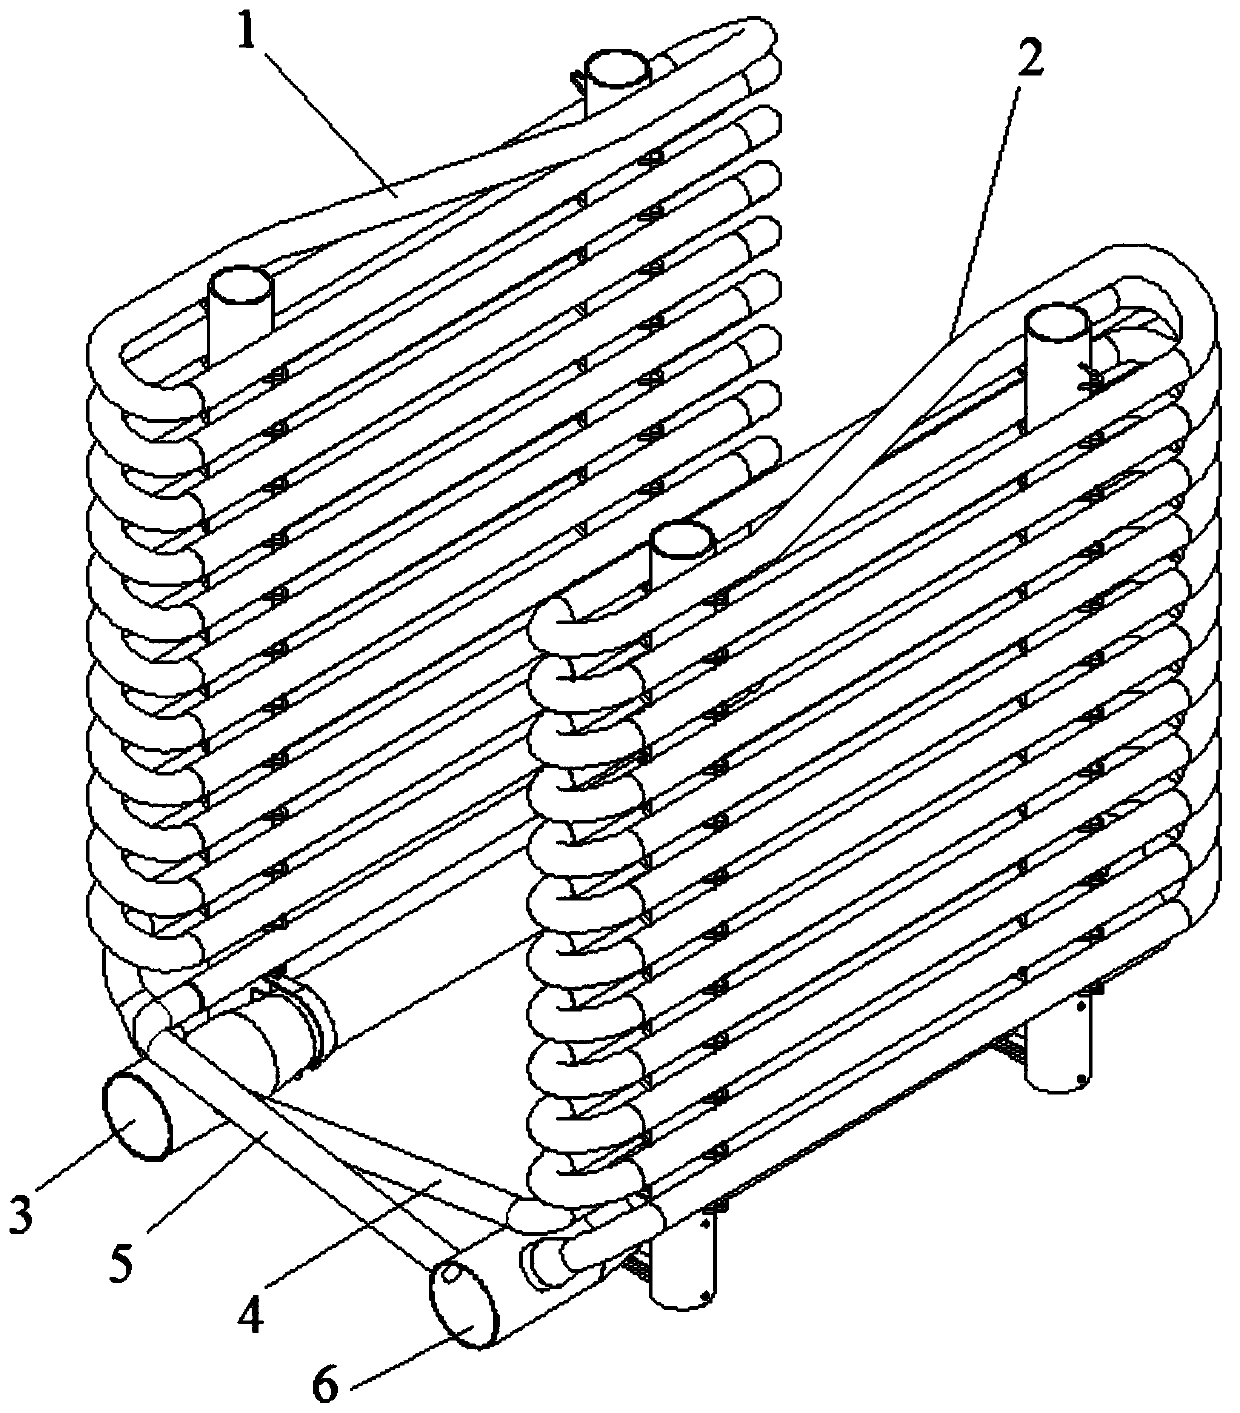 Heat exchanger with uniform furnace temperature